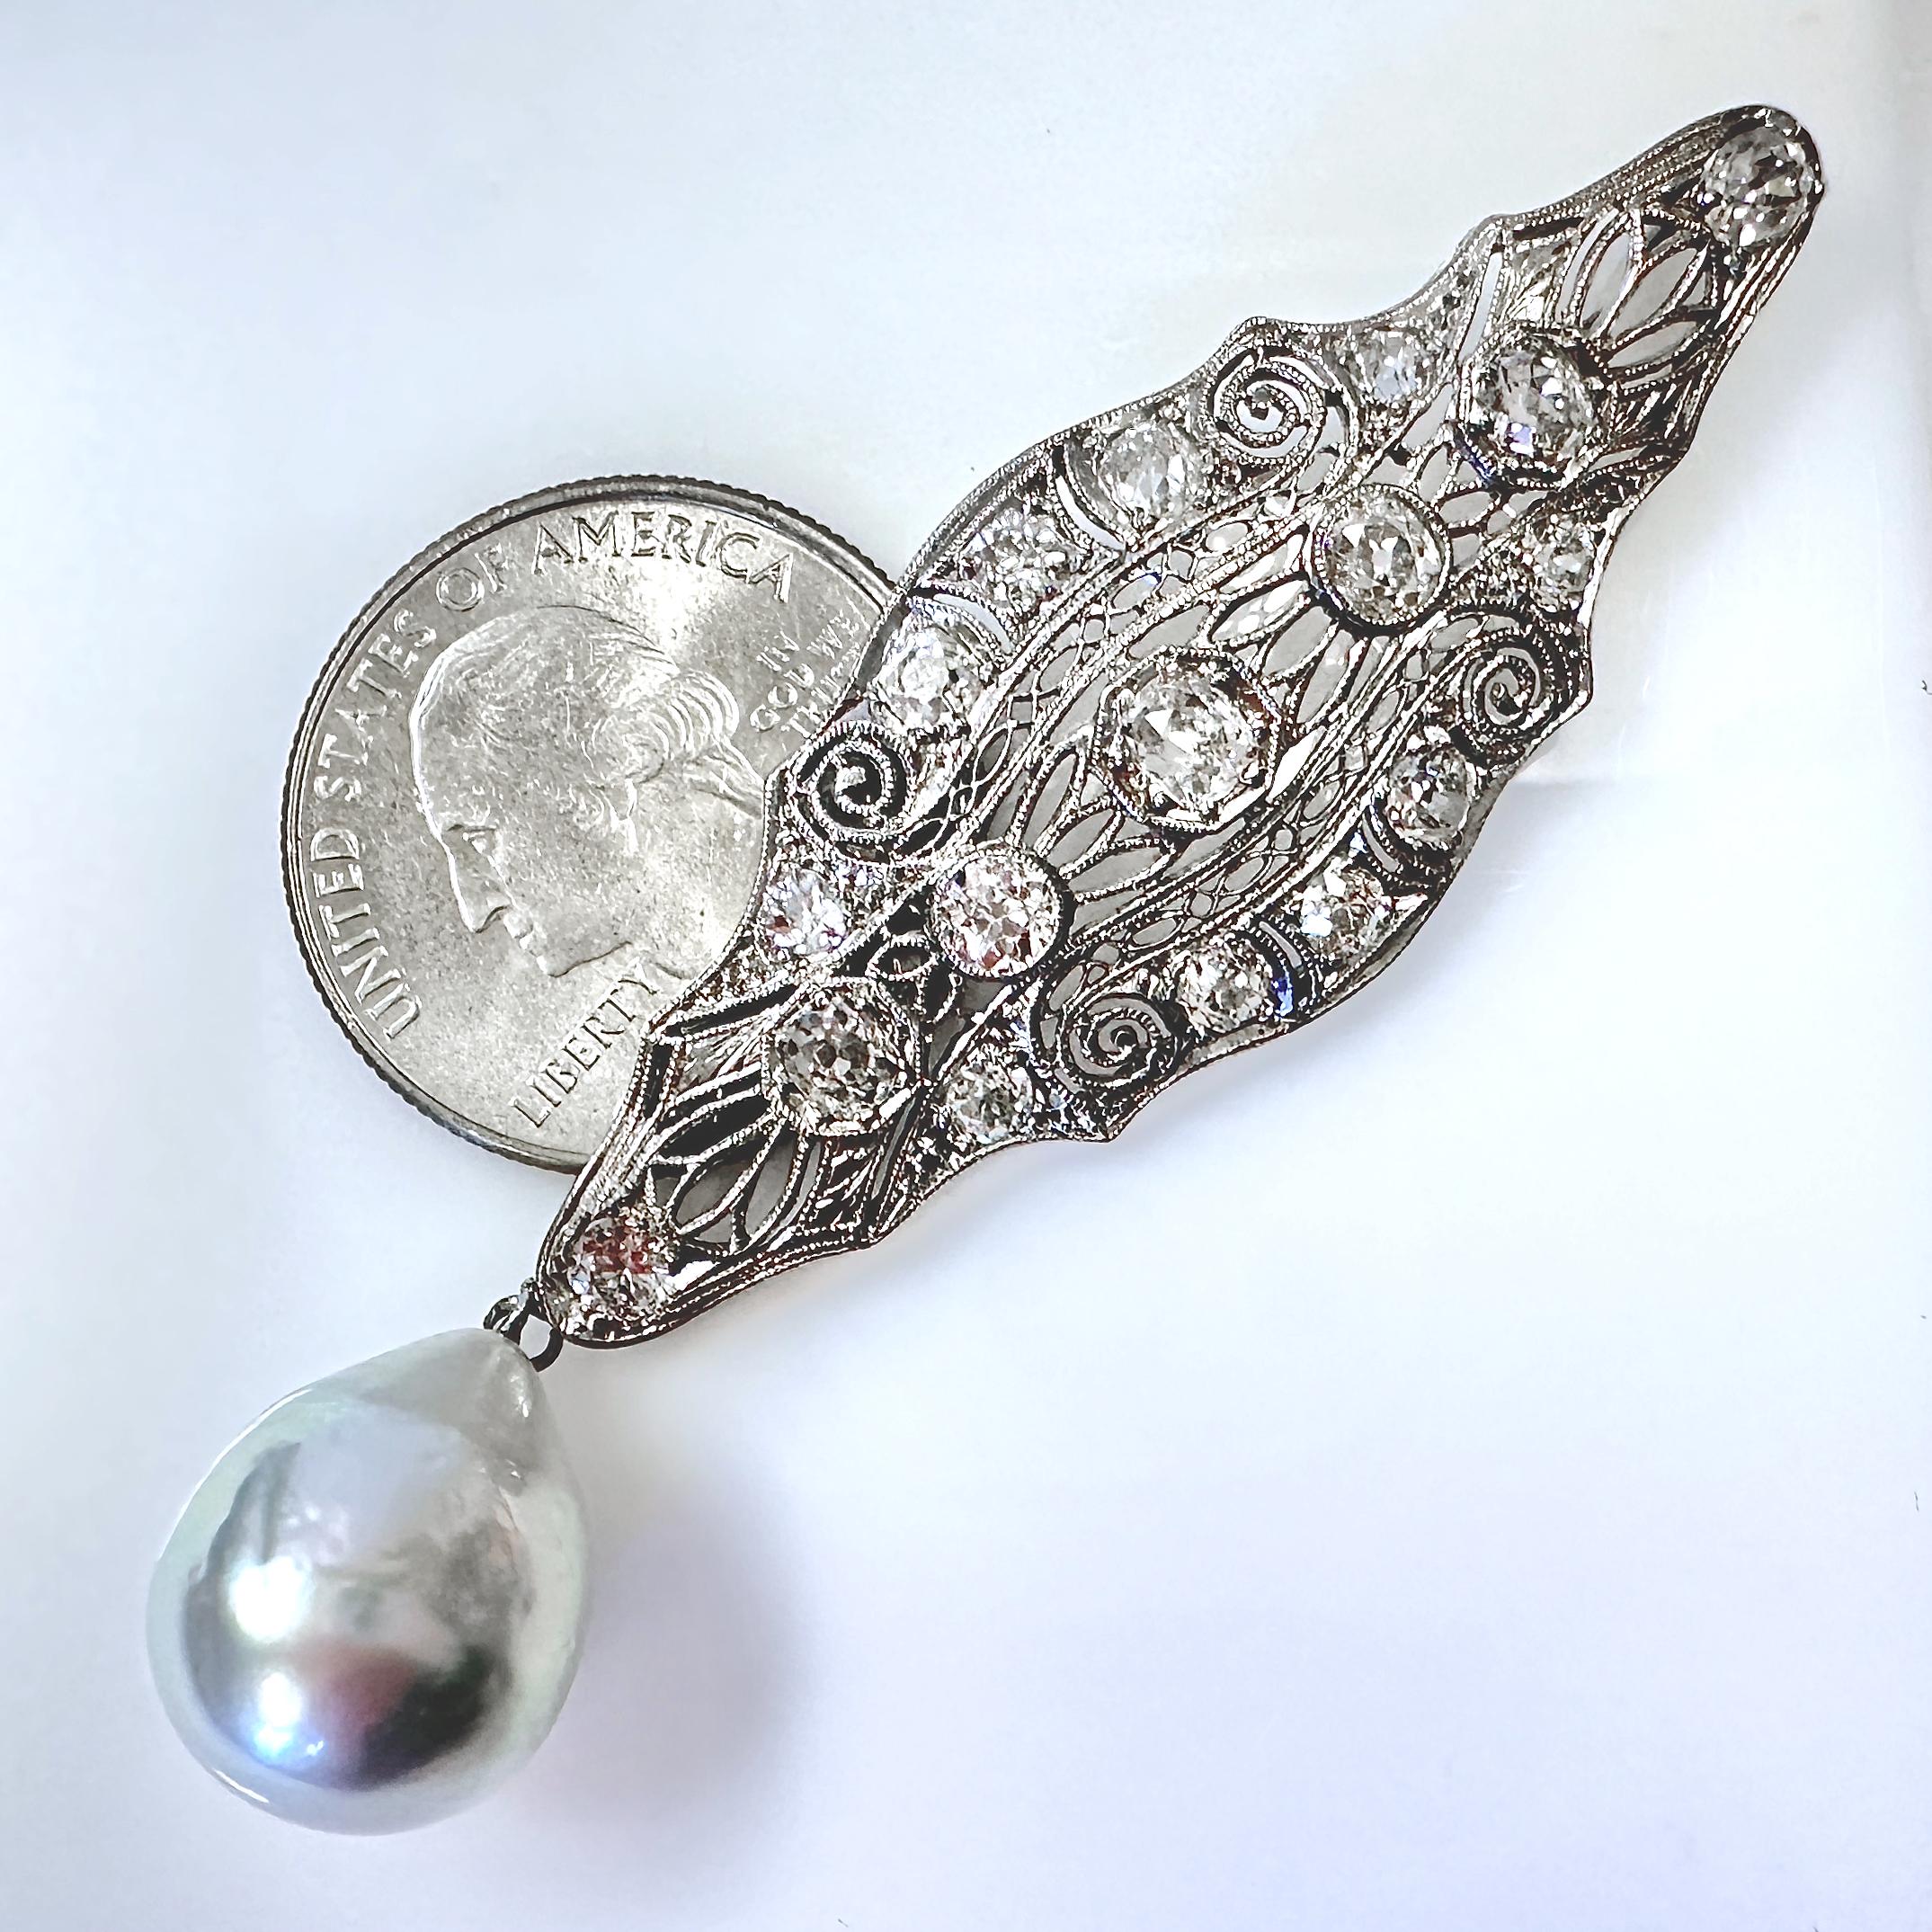 2.8ct Diamond Pendant in Platinum w South Sea Pearl Drop & 18K White Gold Chain For Sale 1